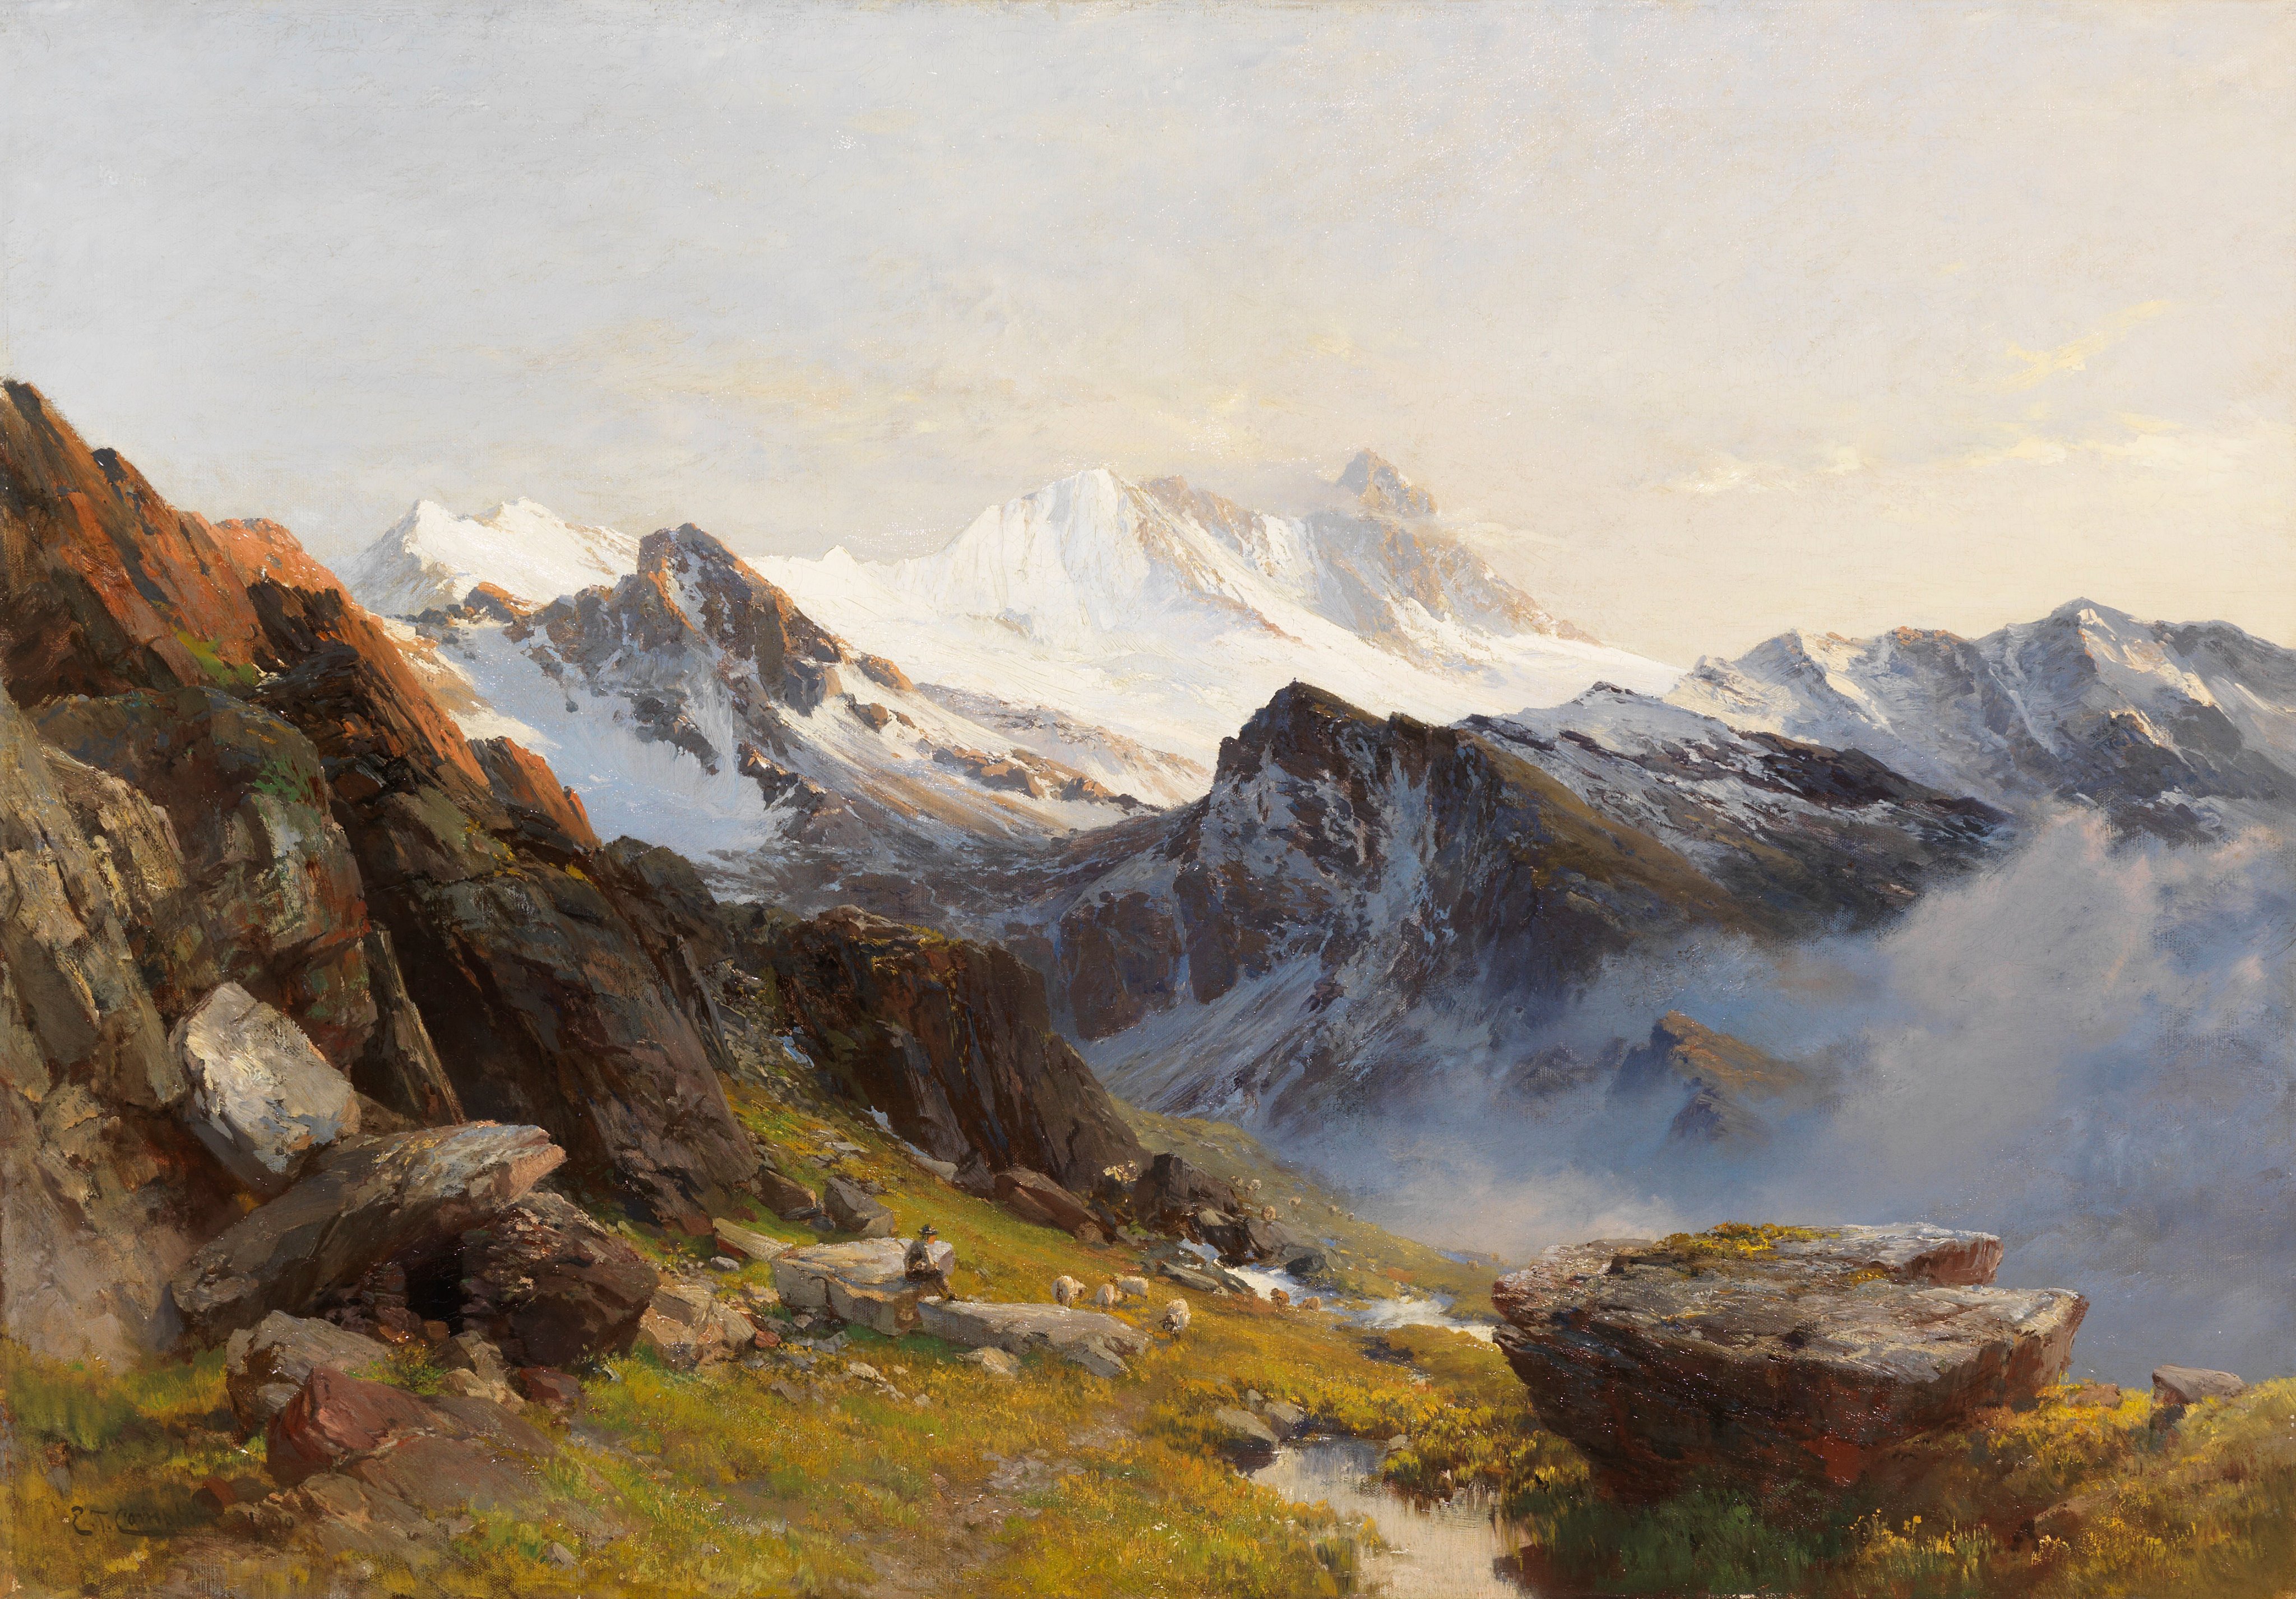 Painting Landscape Nature Mountains 4096x2853